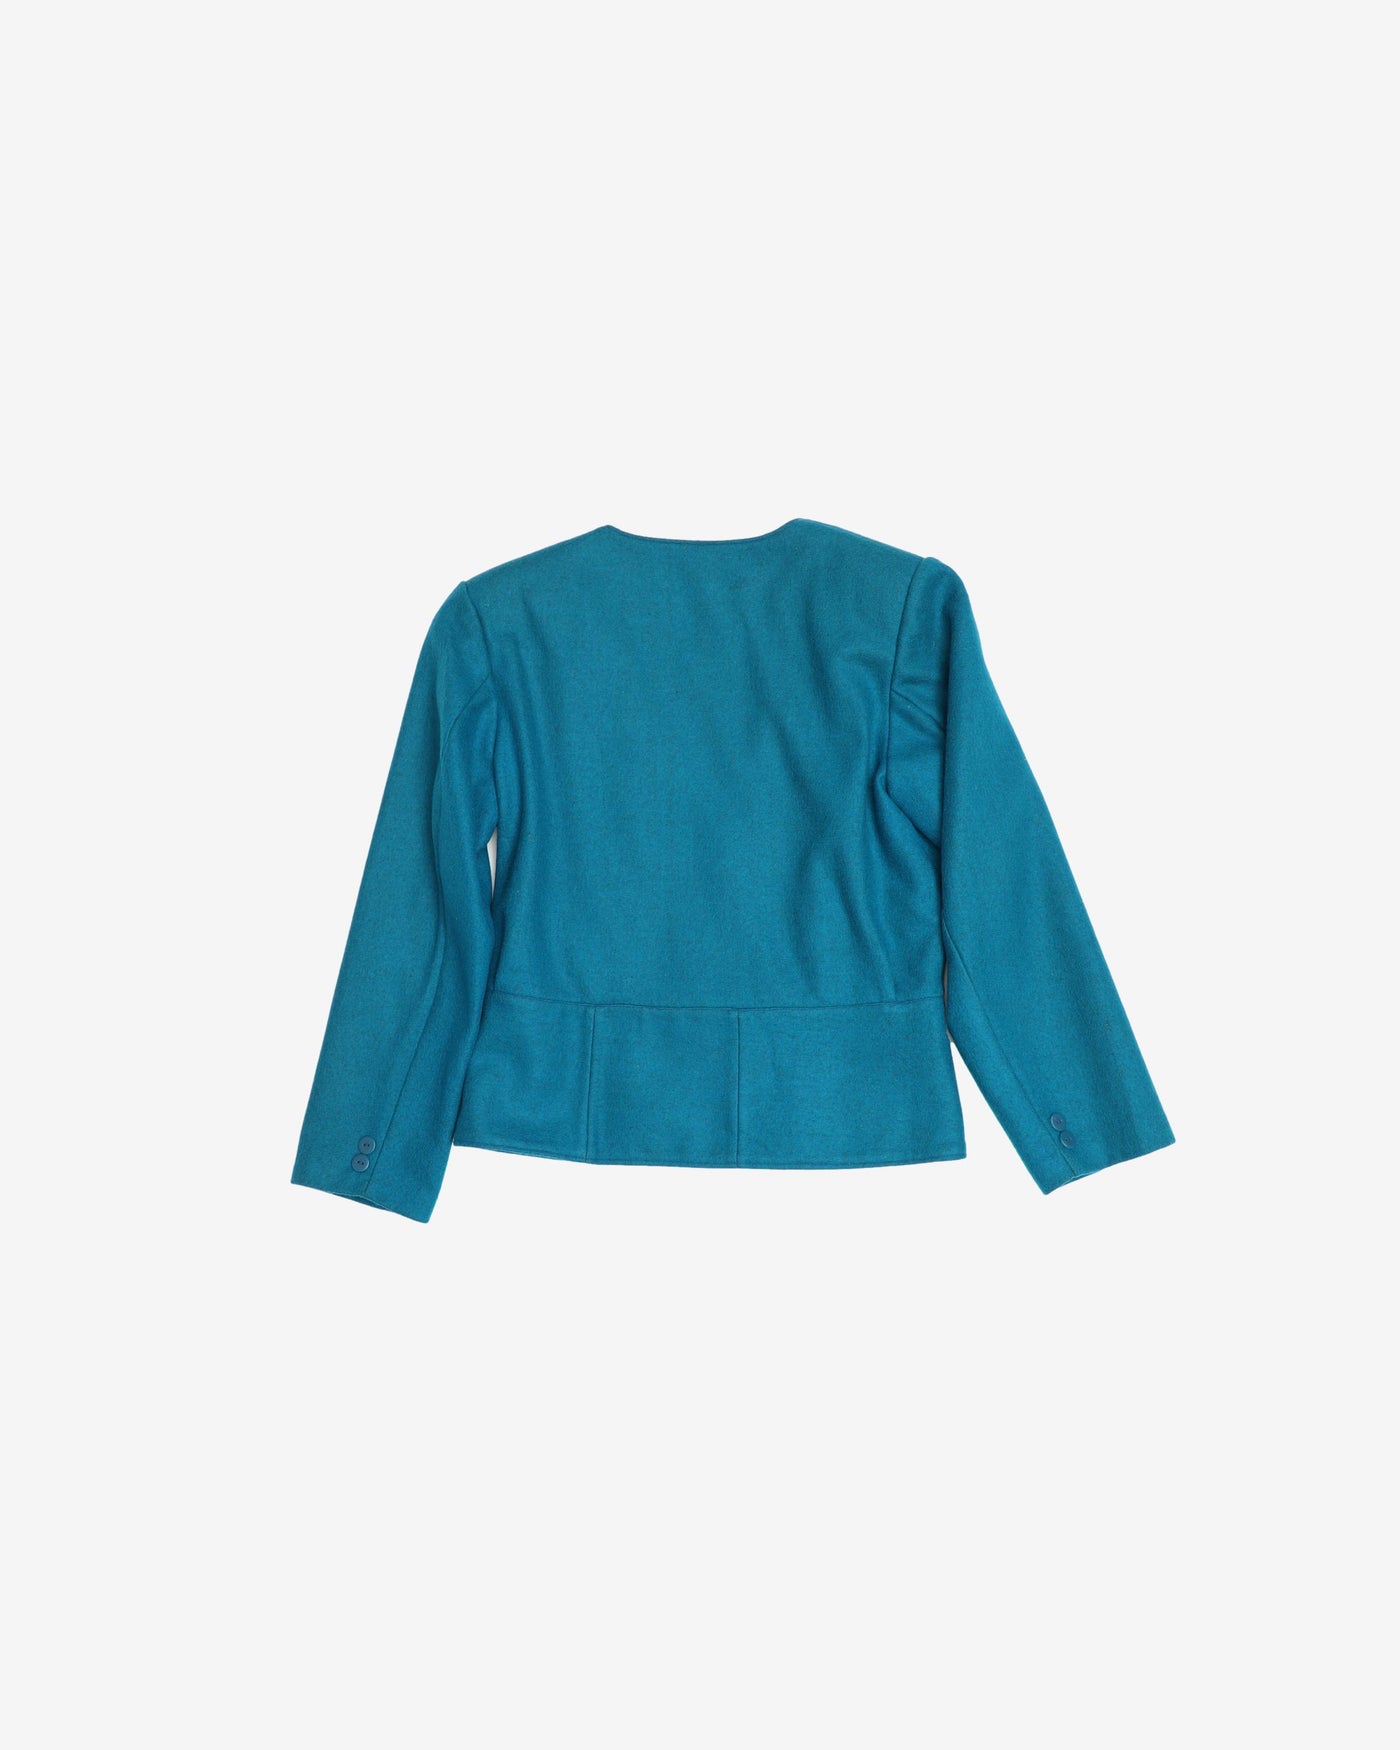 Turquoise  wool blazer style jacket - S